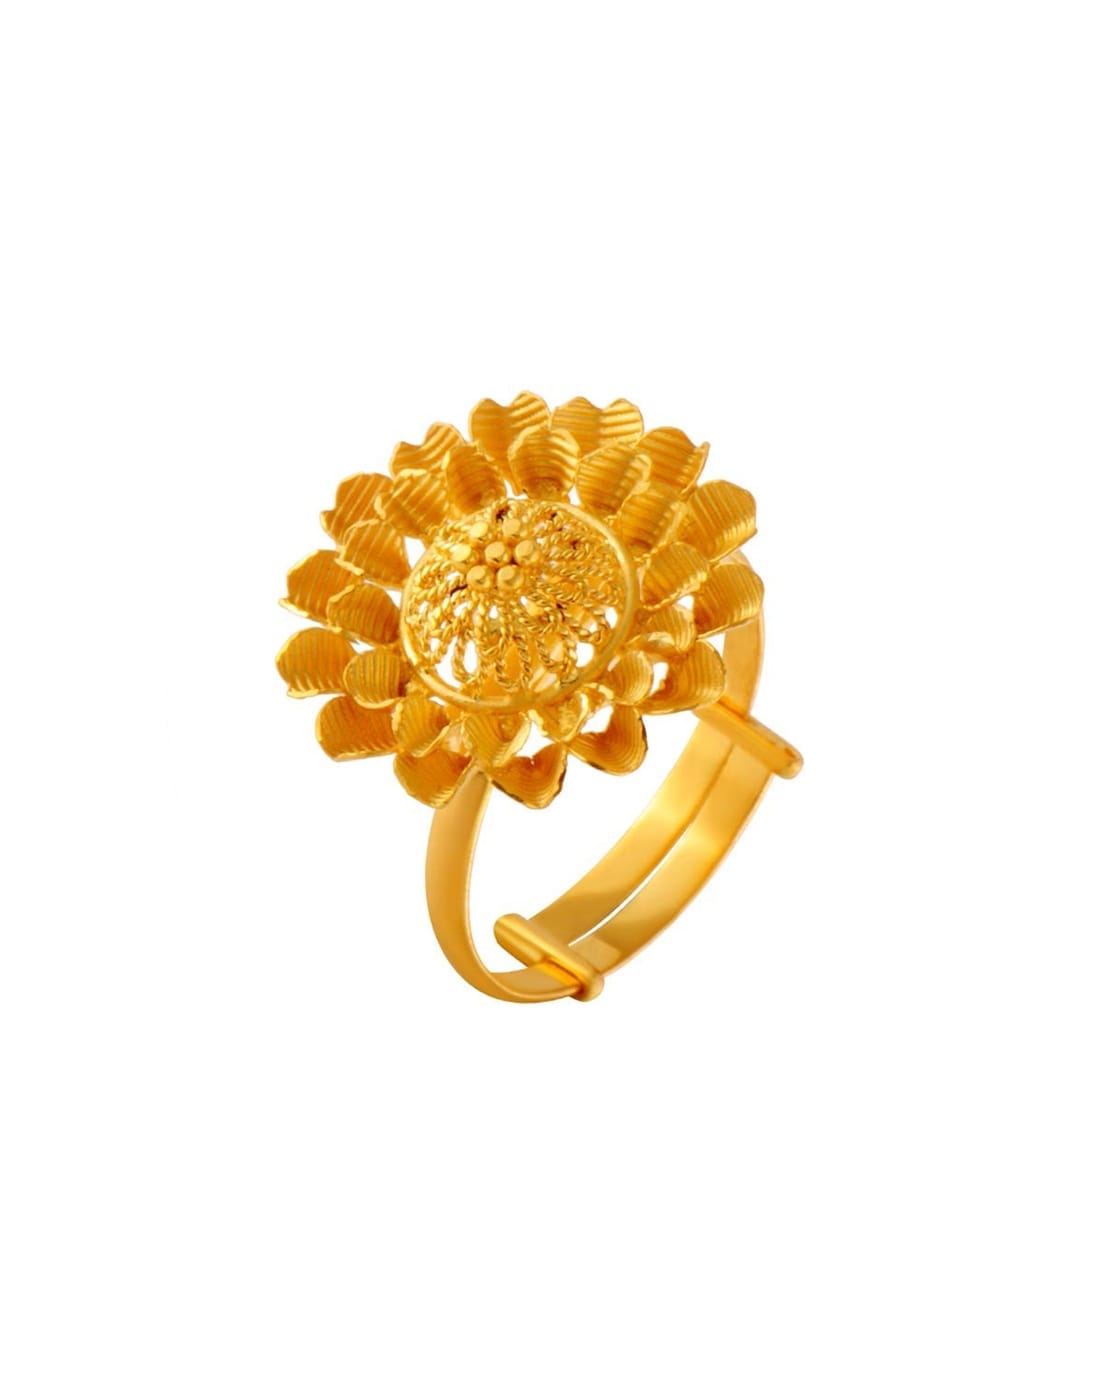 Buy Gold Design Best Quality Big Size Gold Covering Finger Ring for Women